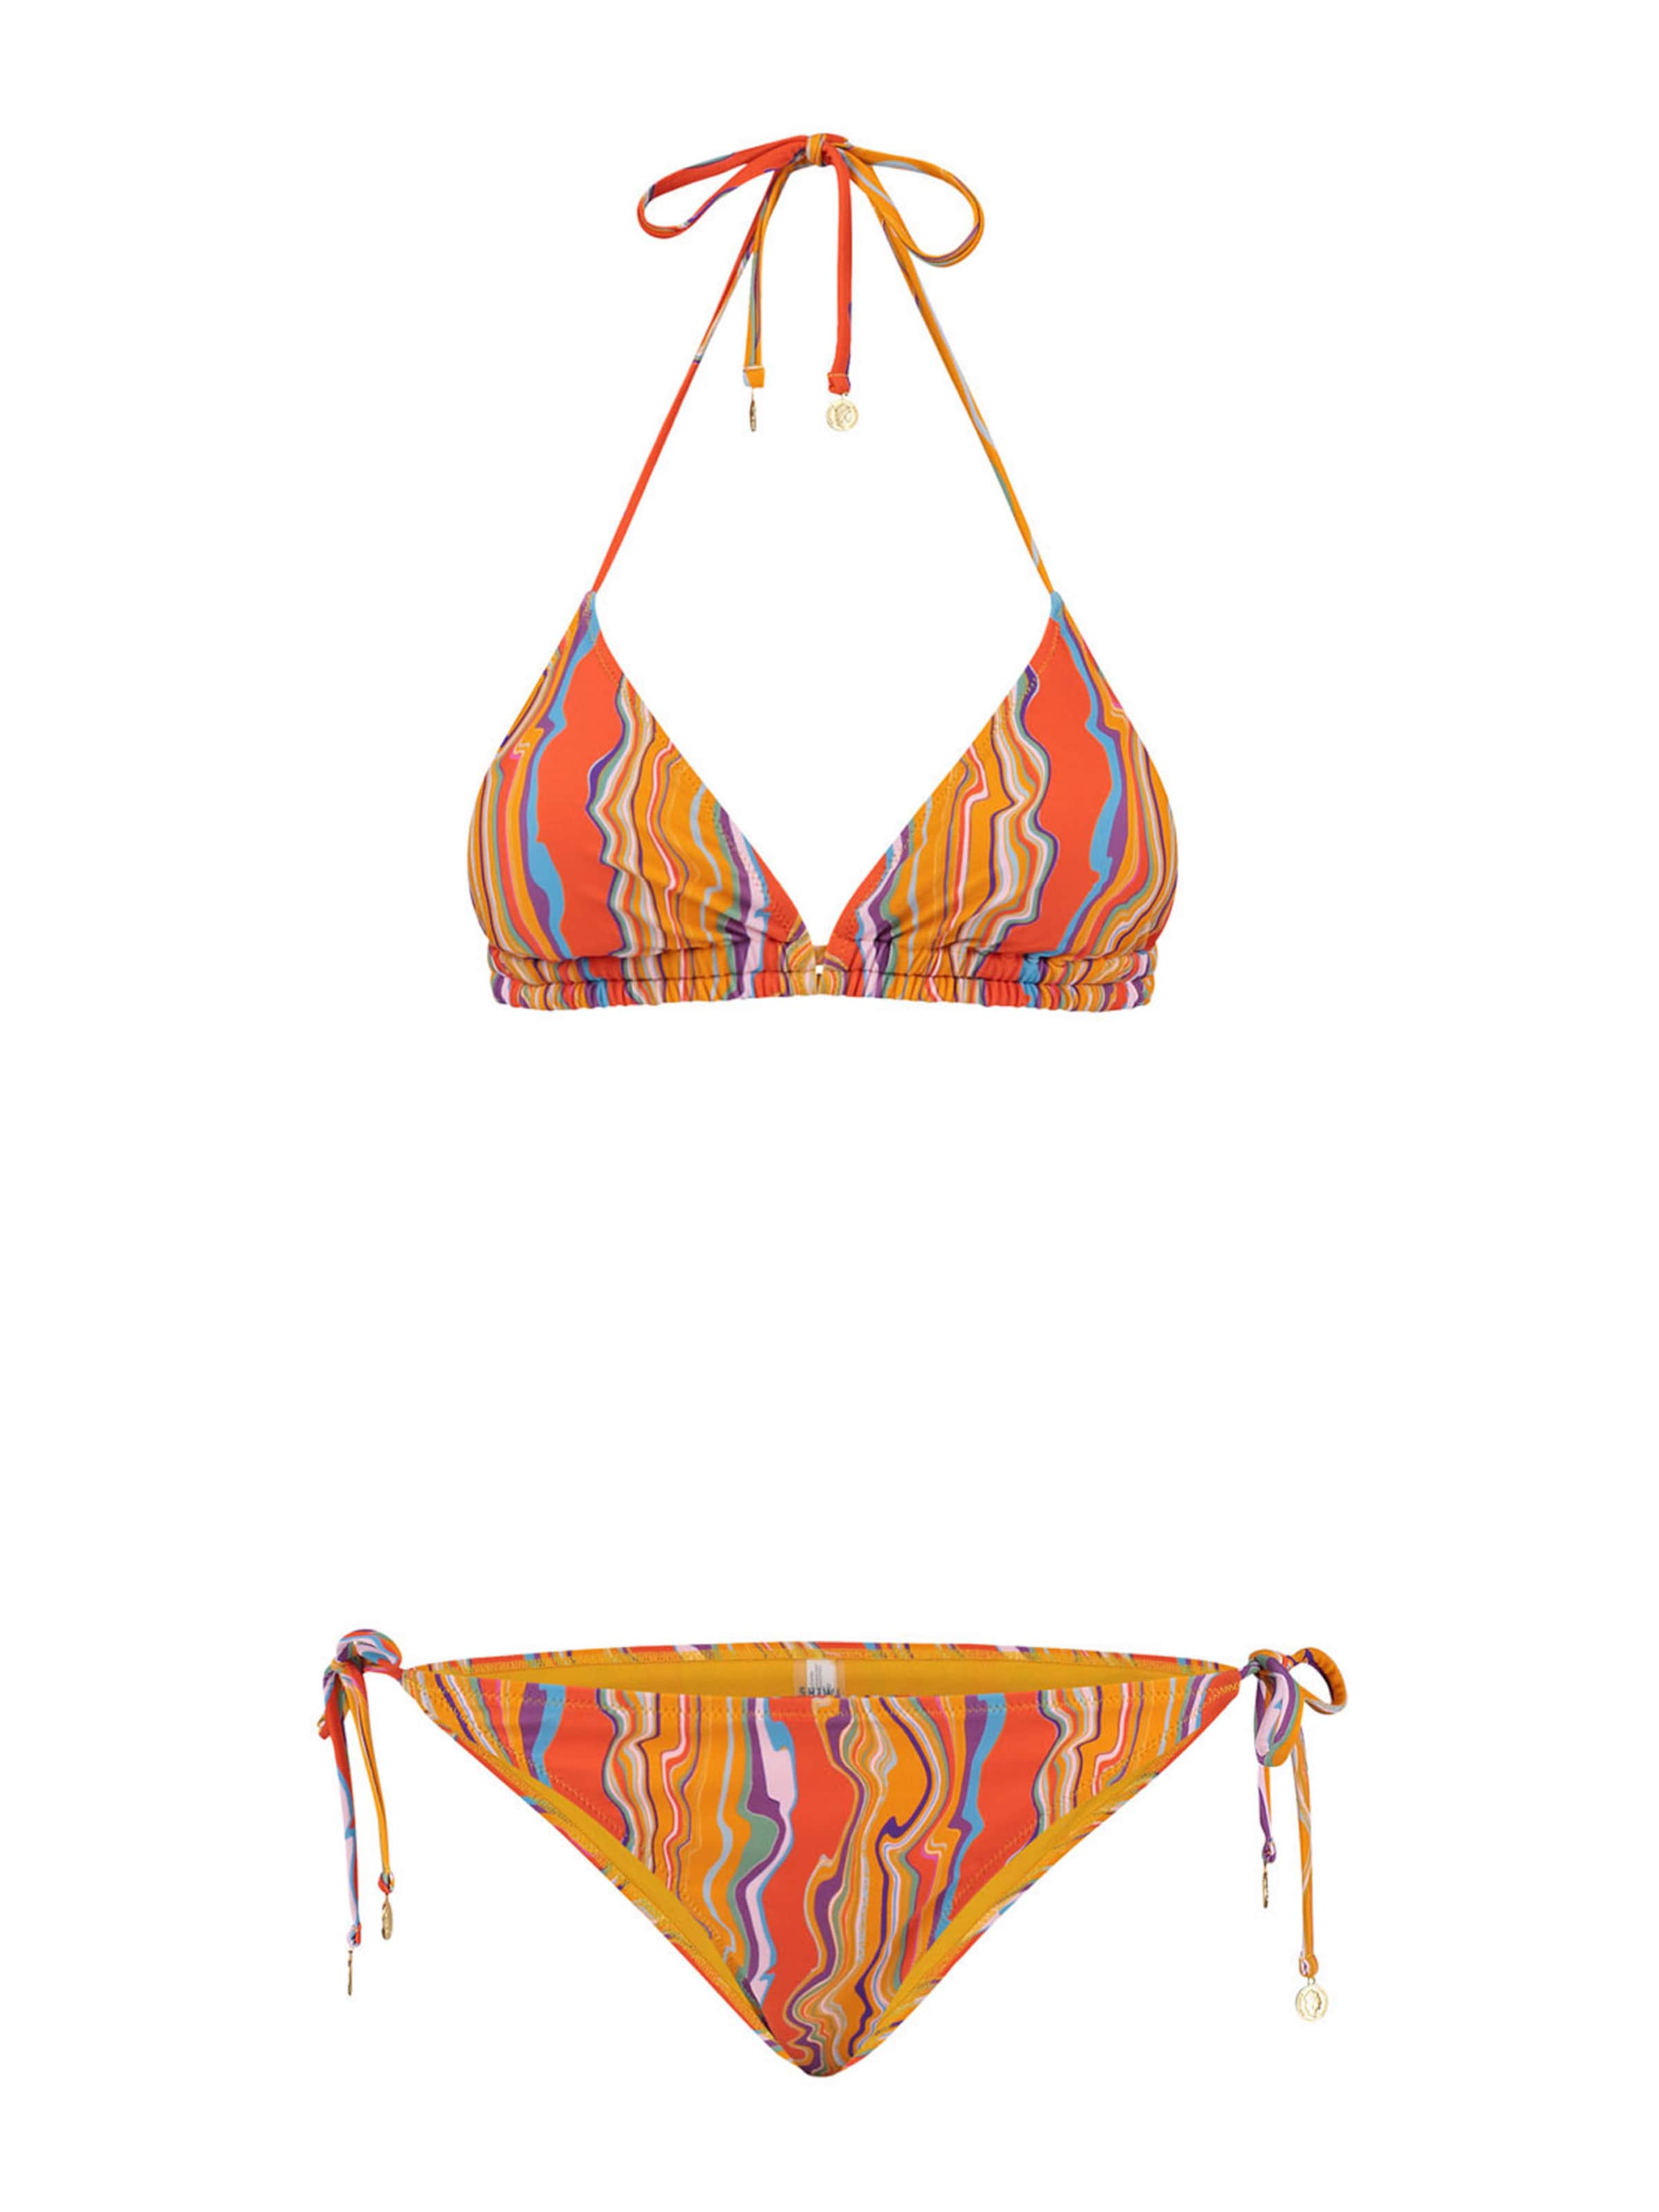 Frauen Bademode Shiwi Bikini in Goldgelb, Dunkelorange - FS46079